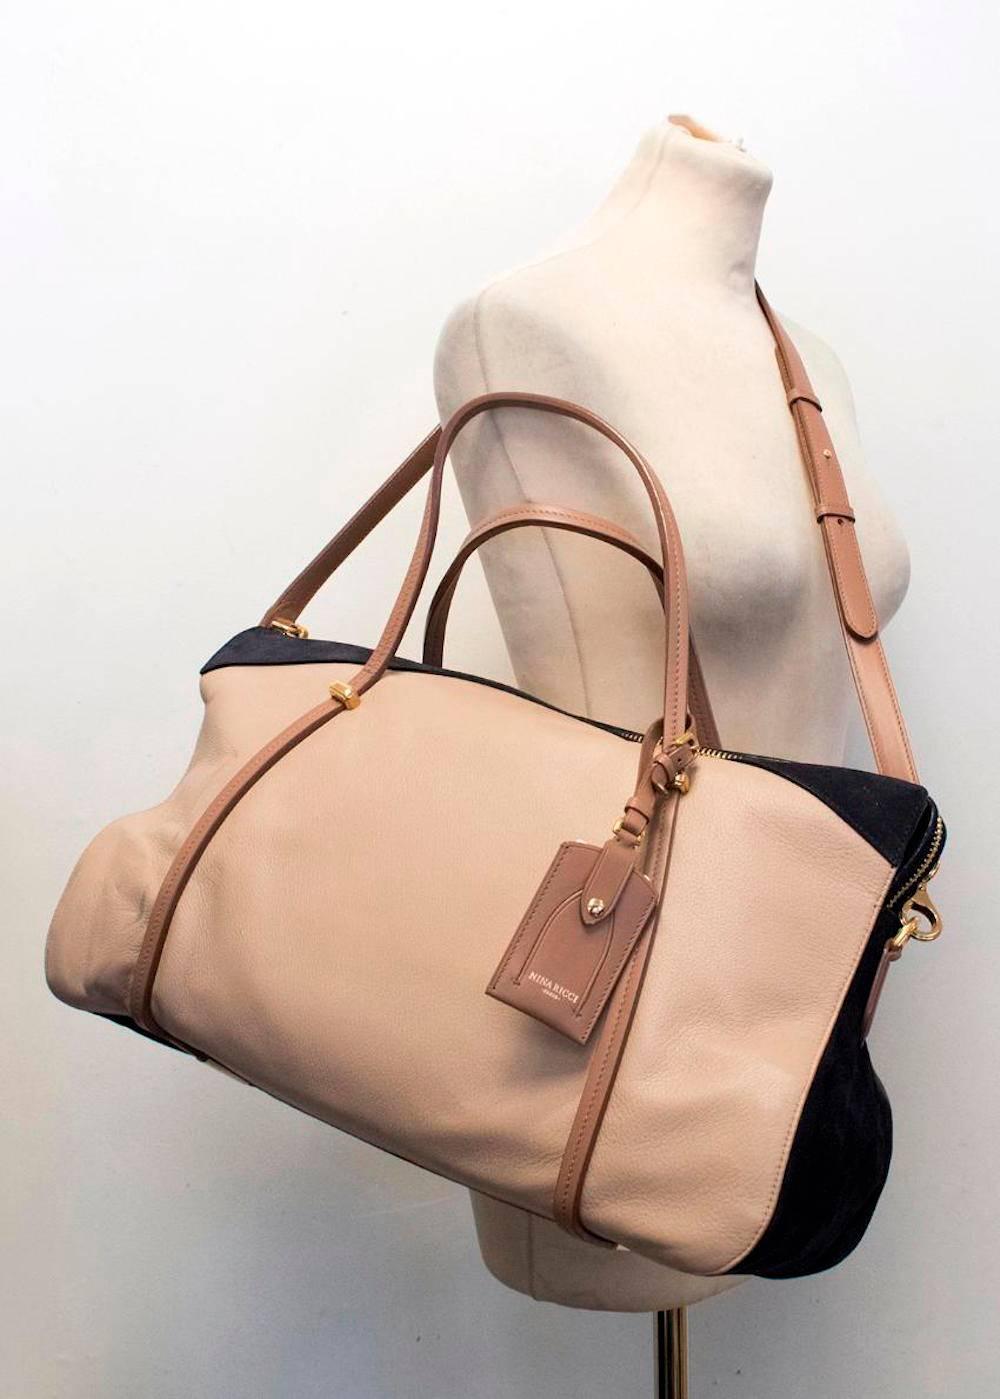 Women's Nina Ricci Paris Beige Leather and Suede Shoulder Bag  For Sale